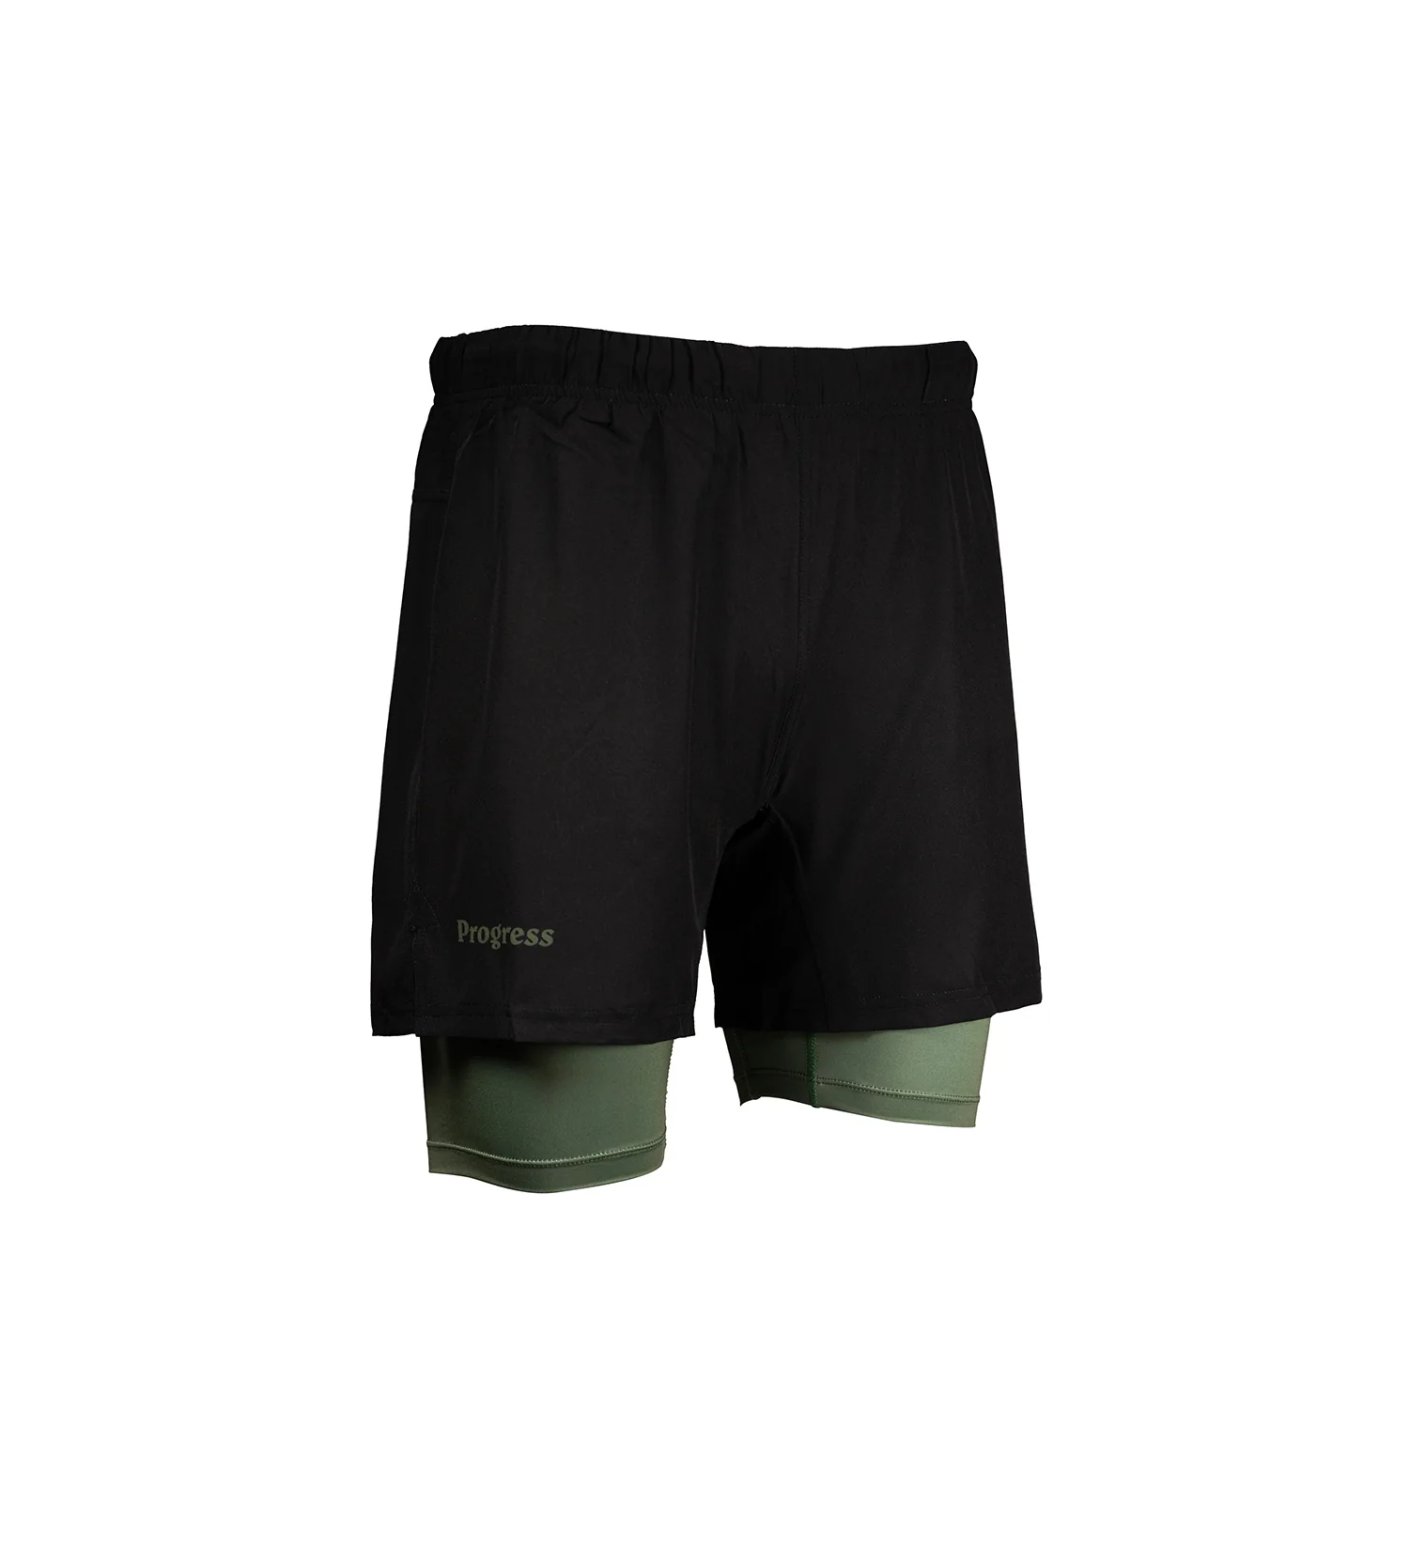 Progress Jiu Jitsu Academy Plus Hybrid Shorts - Black/Green - Click Image to Close